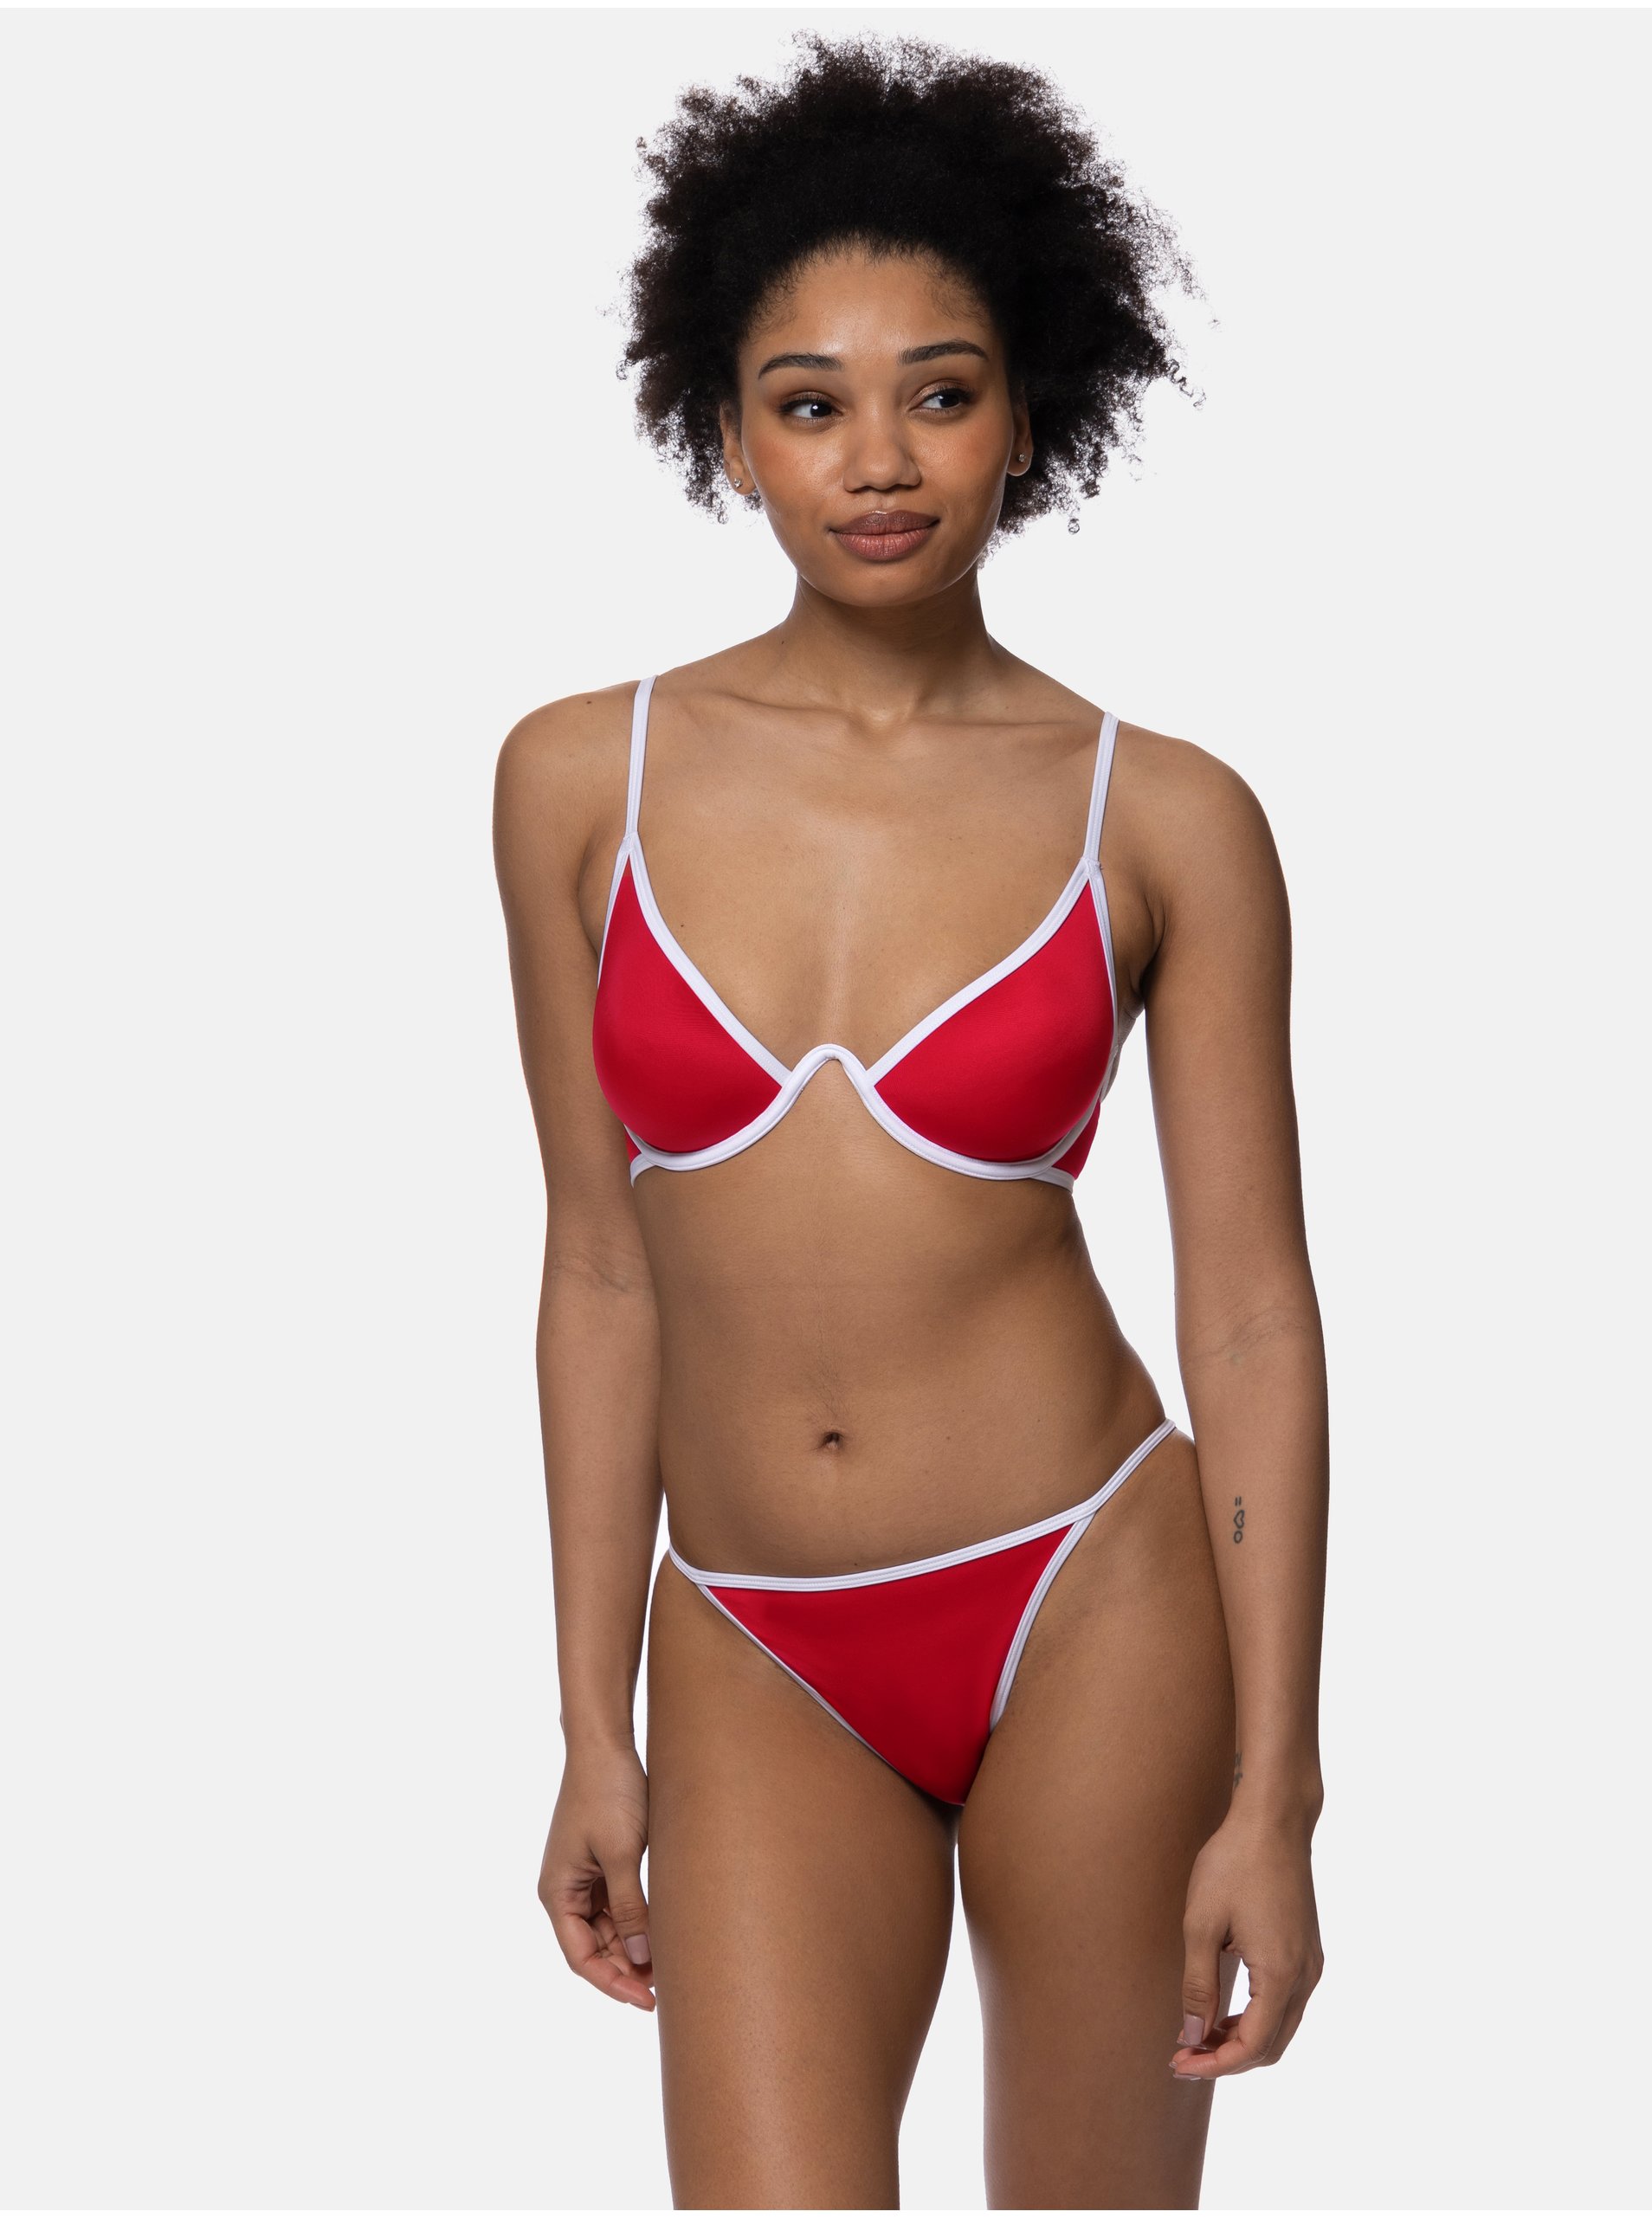 Red Women's Swimwear Upper DORINA Bandol - Women